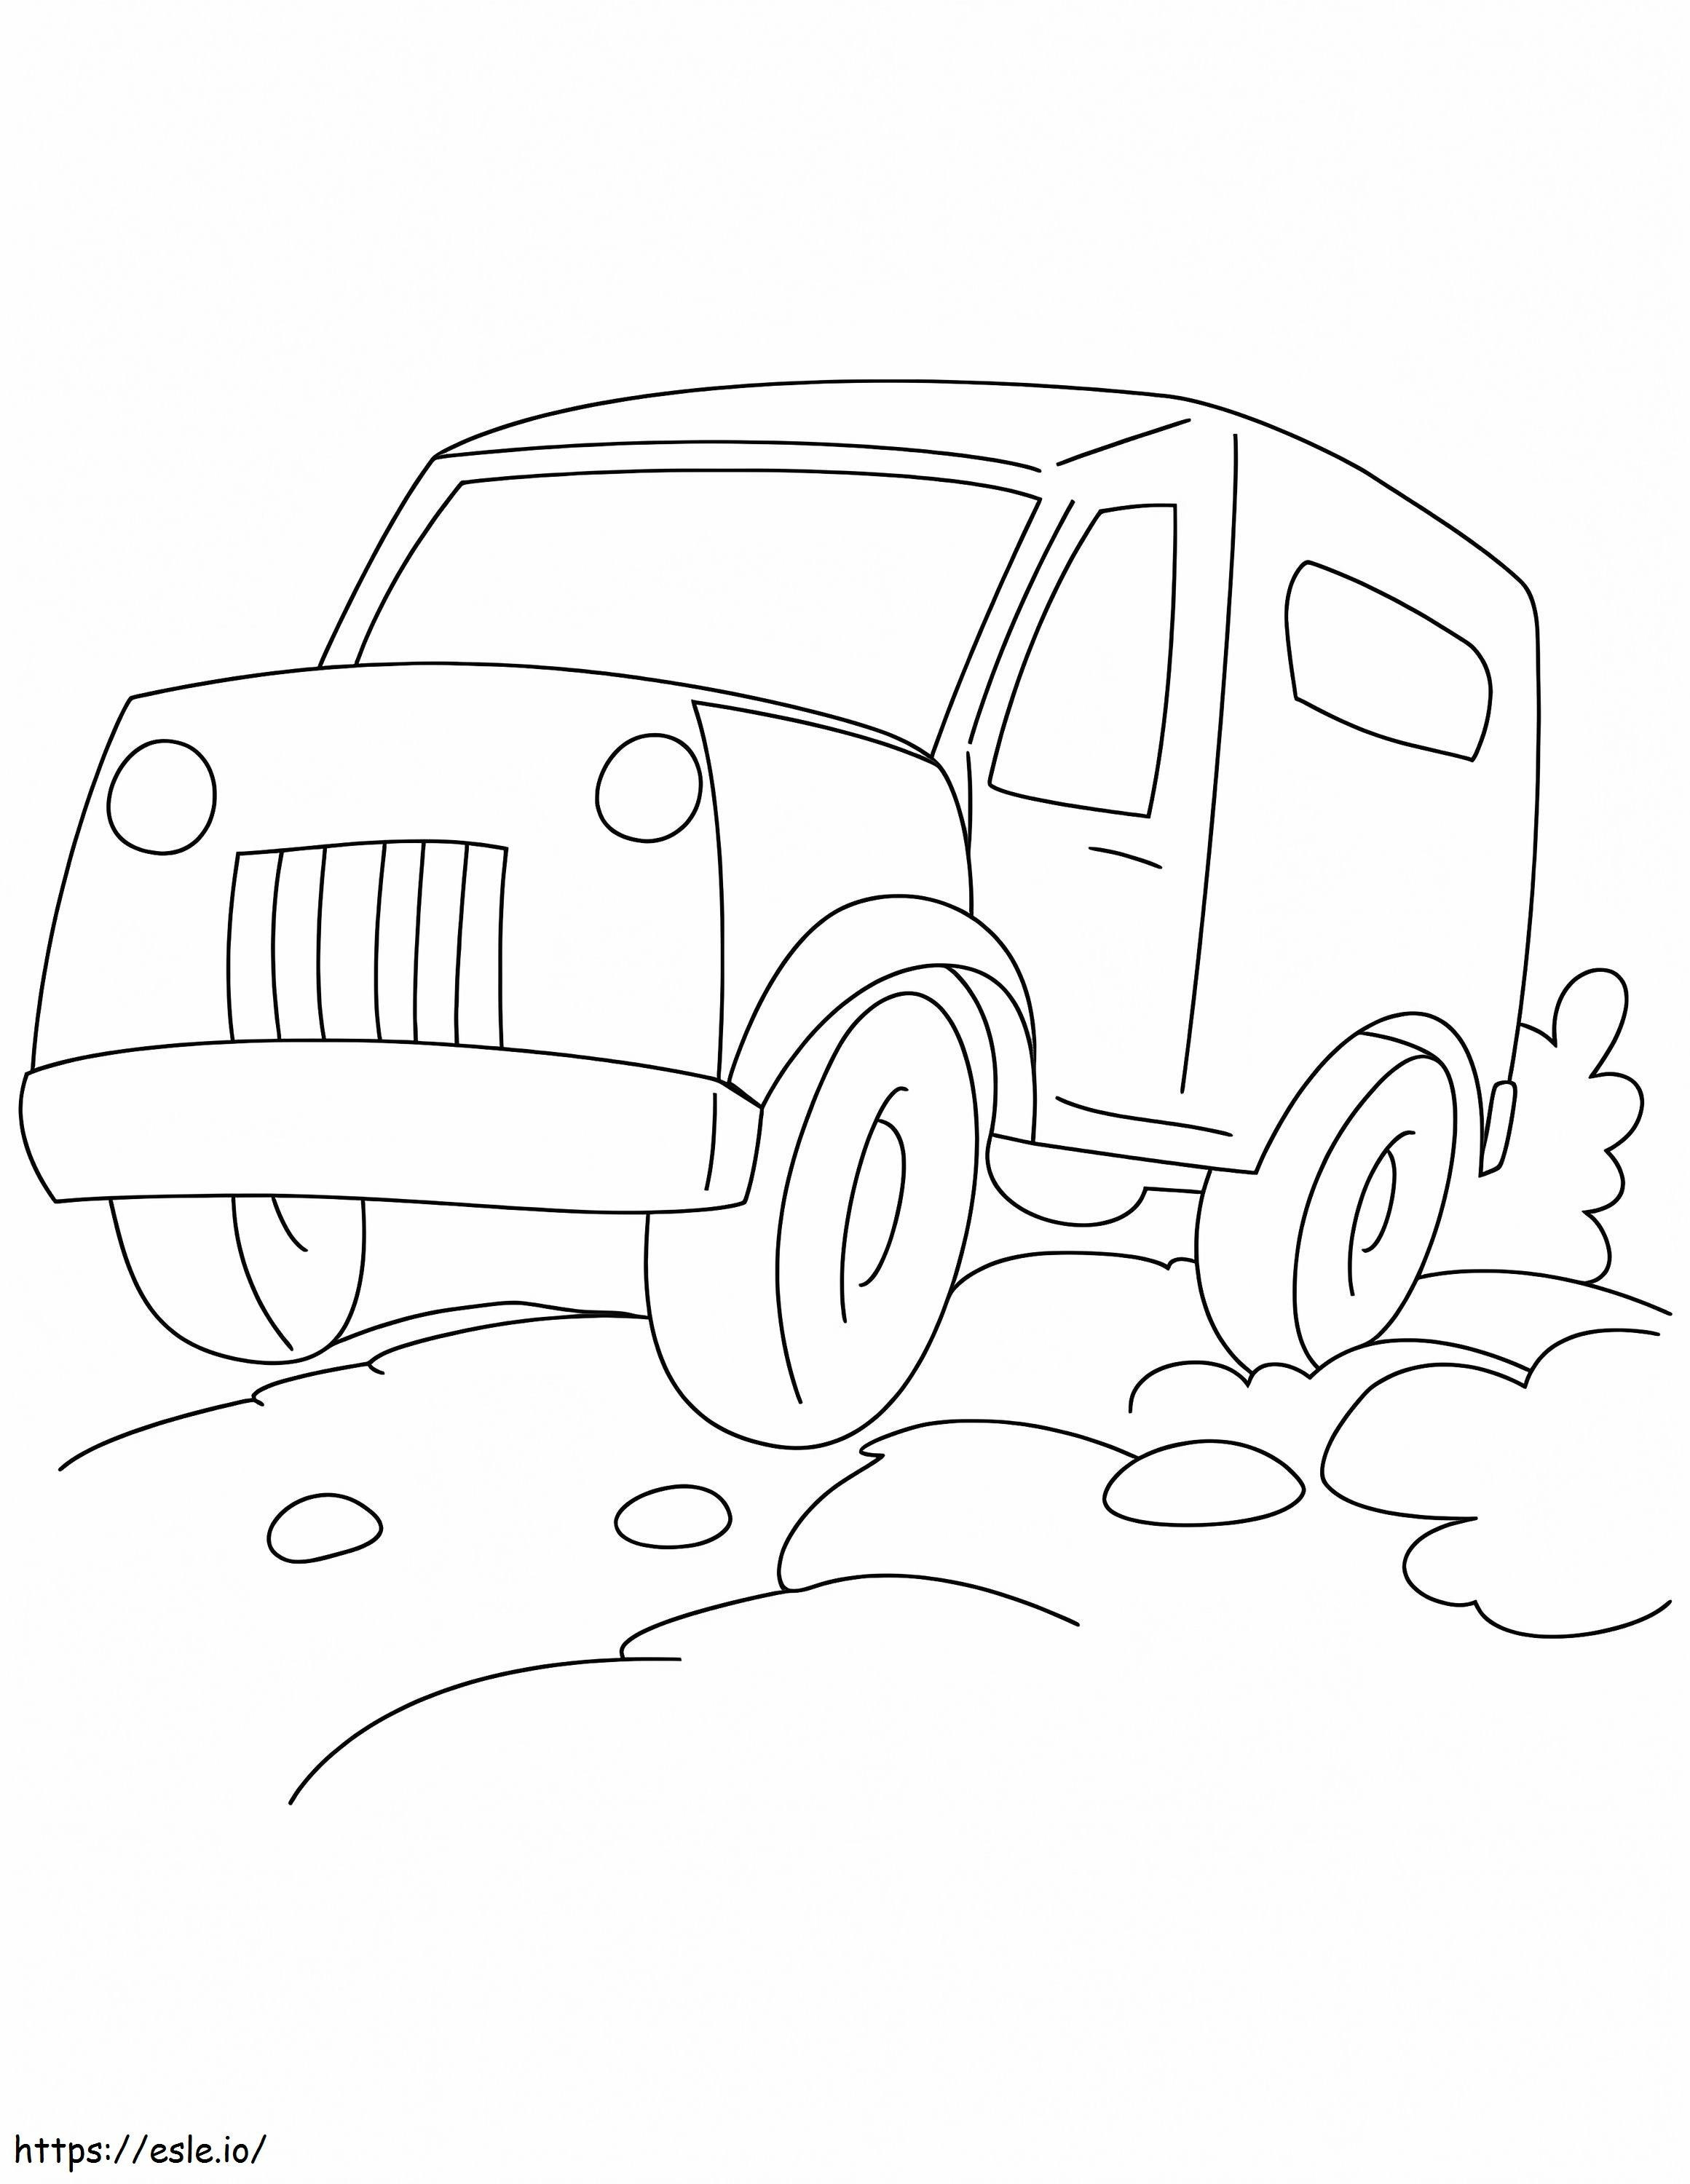 Coloriage Jeep facile à imprimer dessin